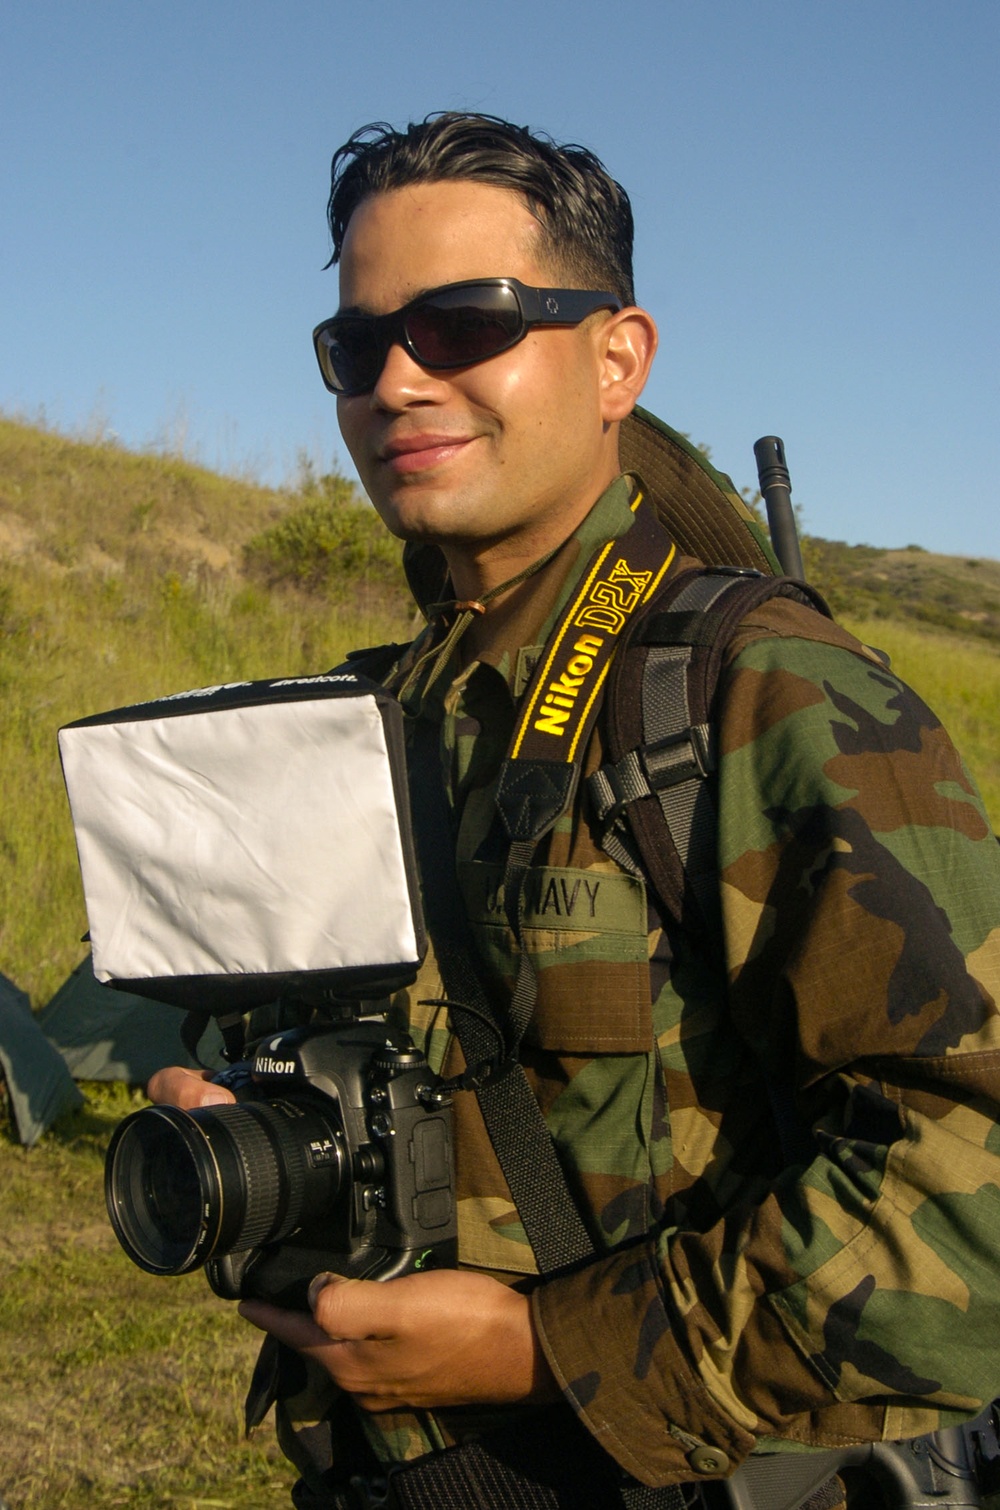 Navy COMCAM operator portrait